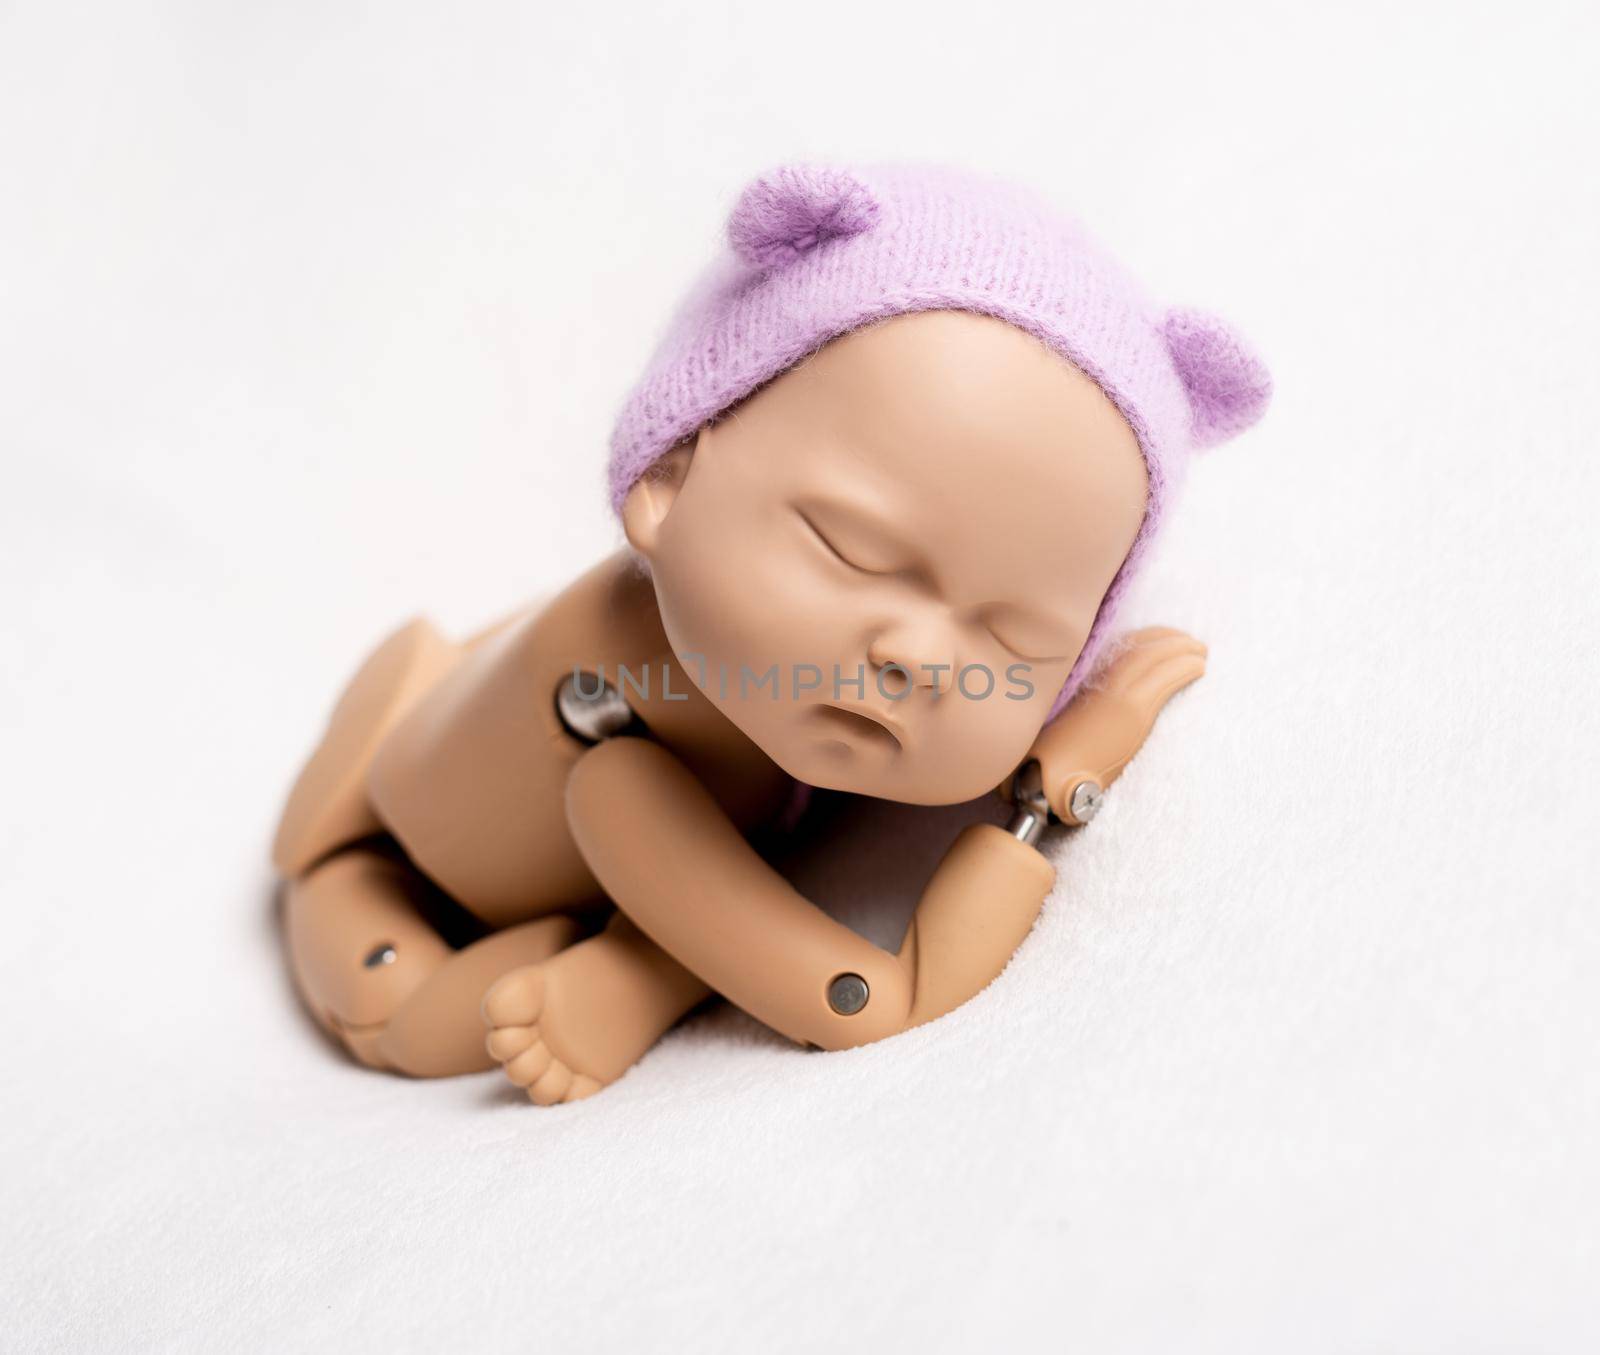 Puppet of newborn child by tan4ikk1